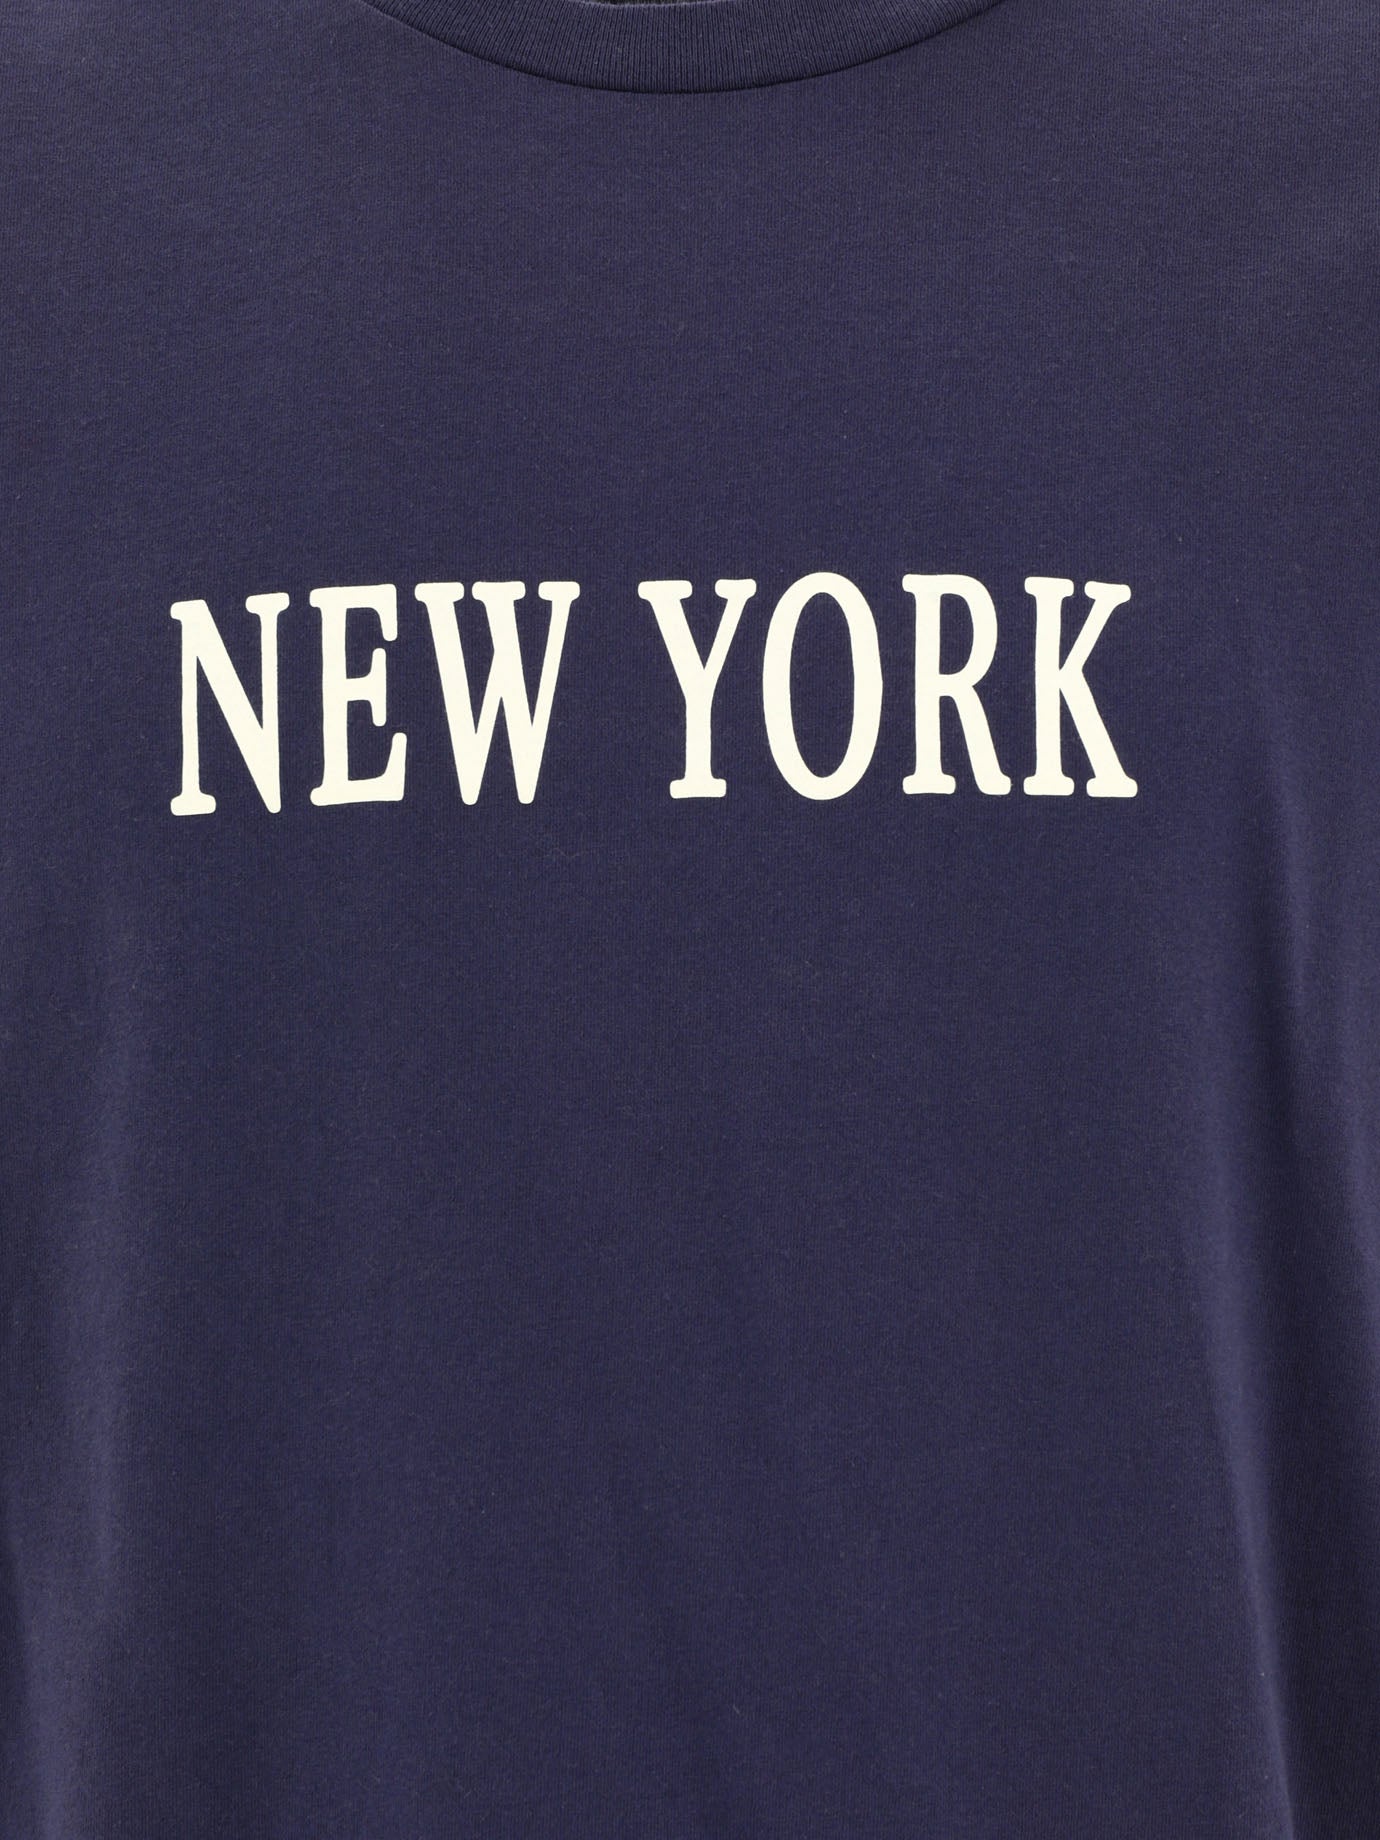 "New York" t-shirt